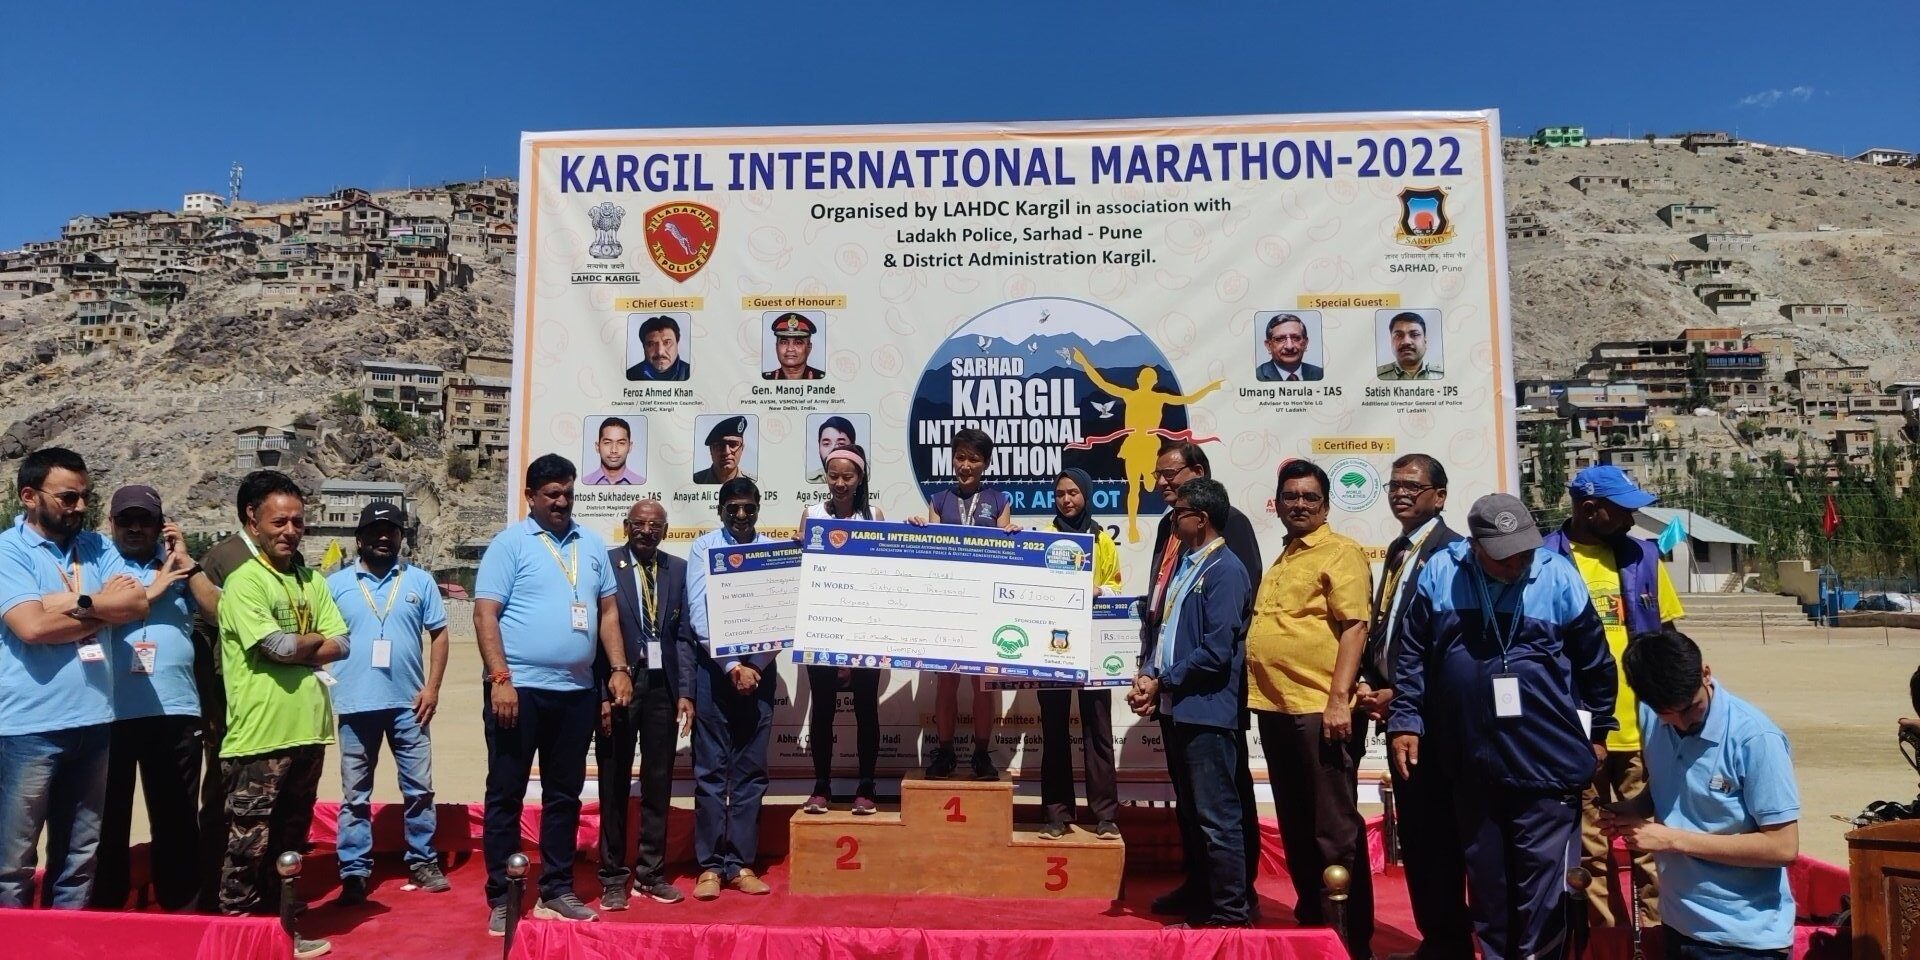 8-facts-about-kargil-international-marathon